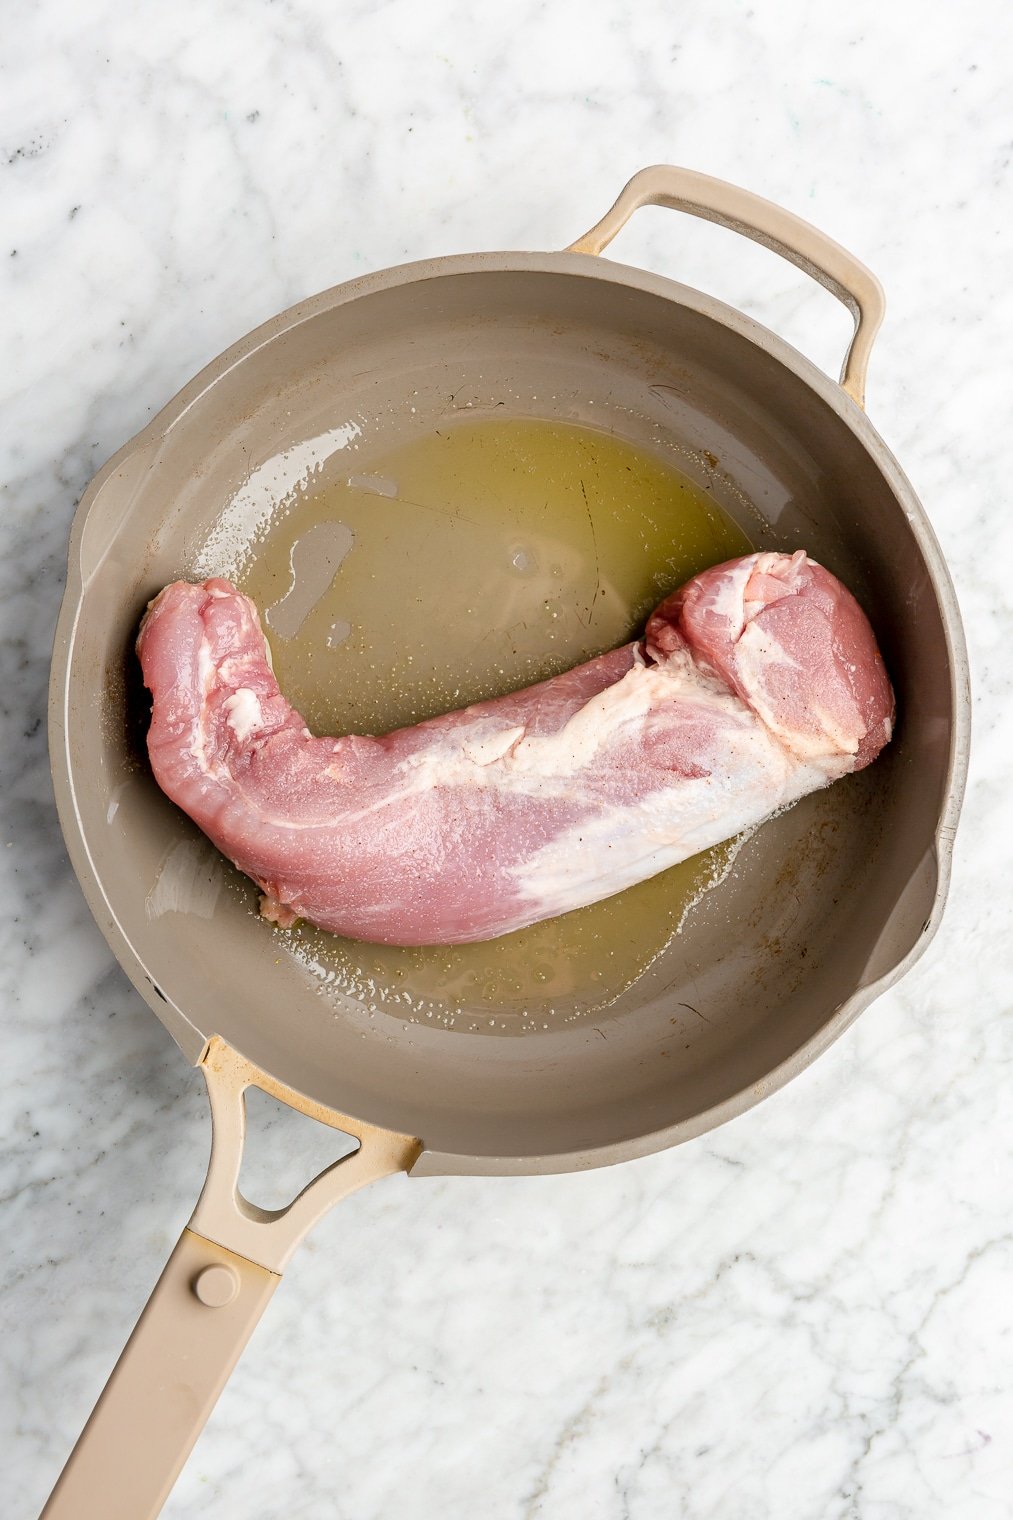 A raw pork tenderloin in a pan with oil.